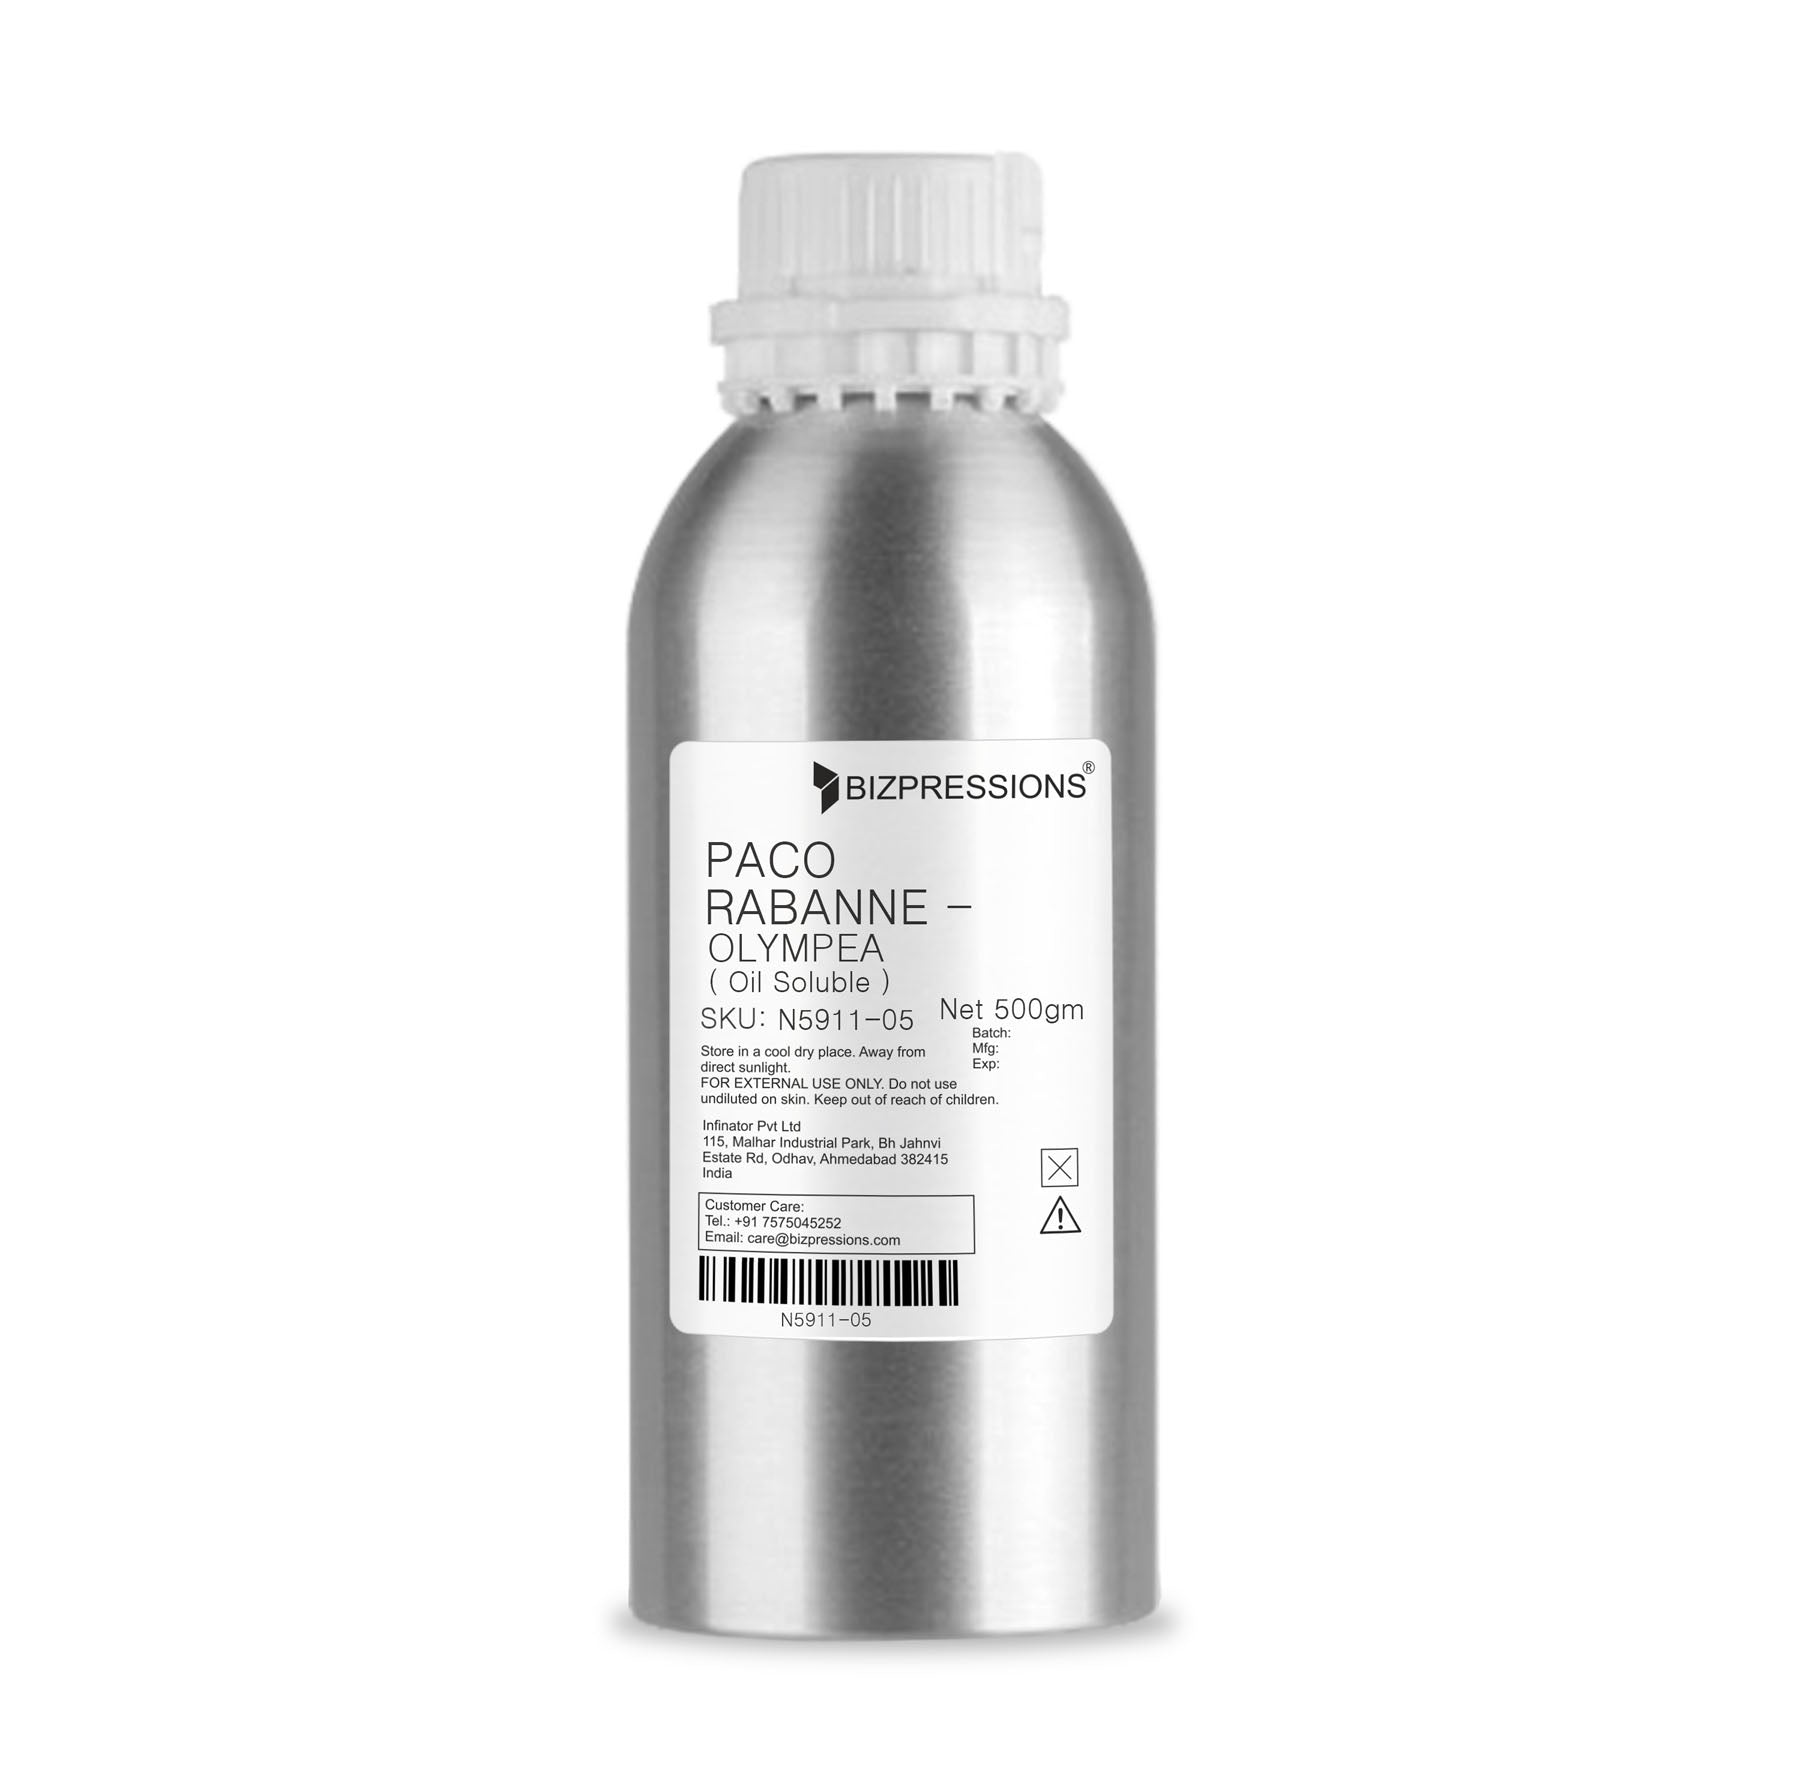 PACO RABANNE - OLYMPEA - Fragrance ( Oil Soluble ) - 500 gm